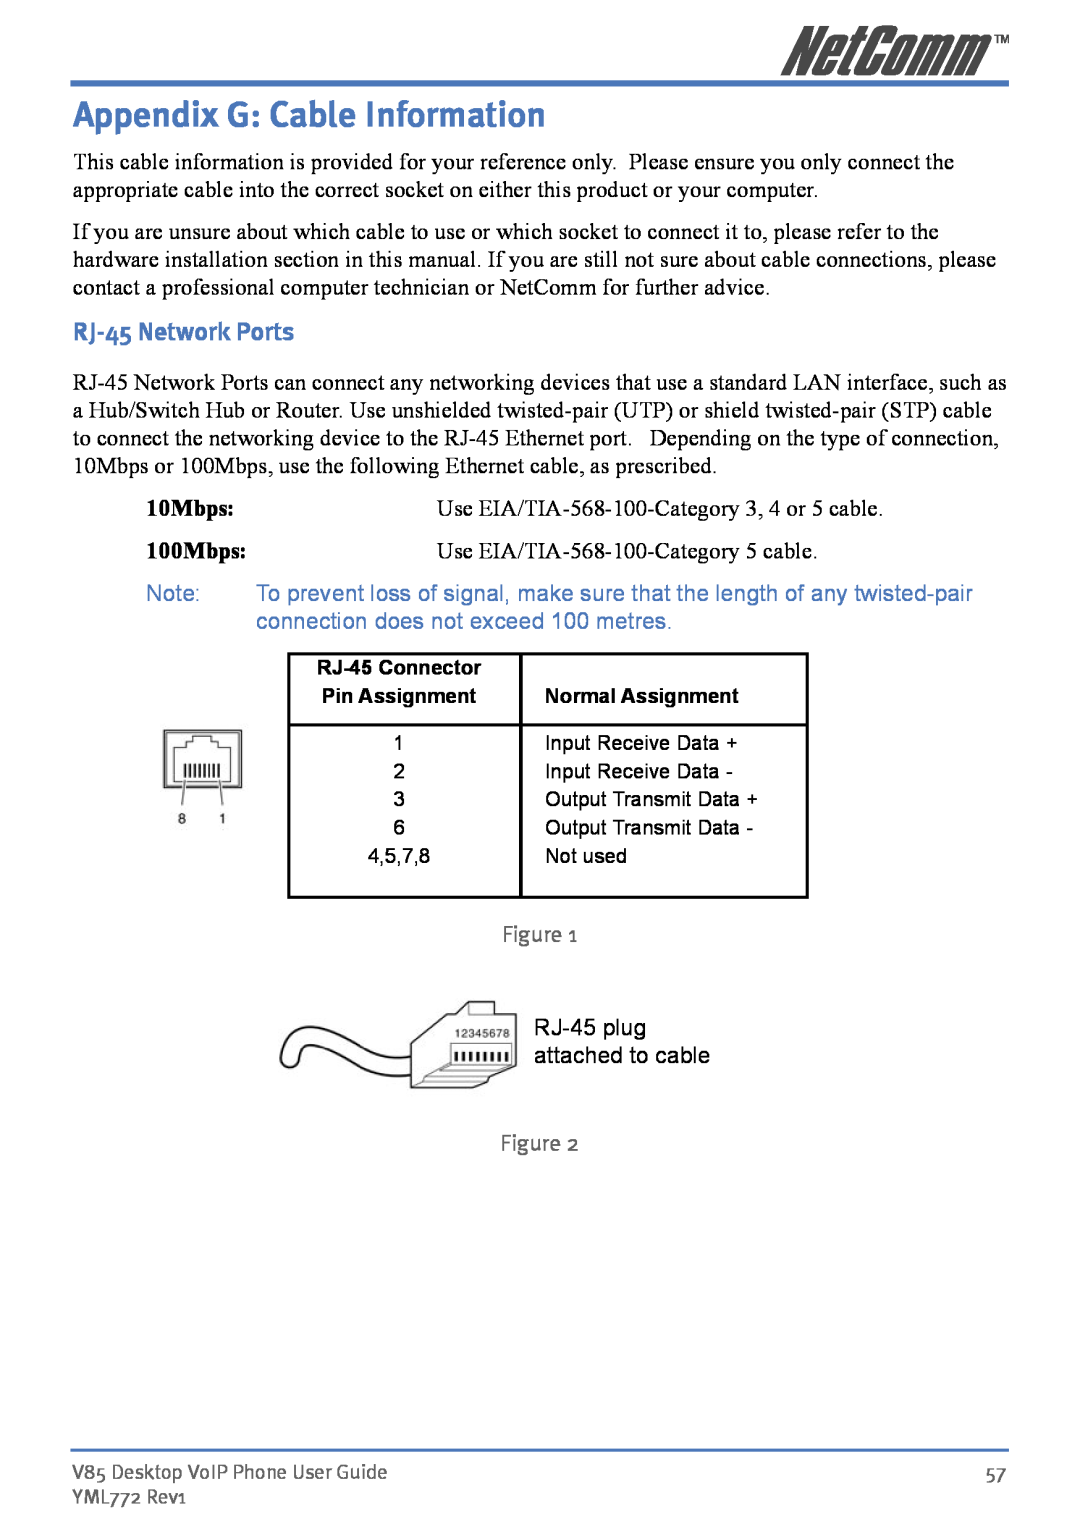 NetComm V85 manual Appendix G Cable Information, RJ-45 Network Ports, 10Mbps, 100Mbps 